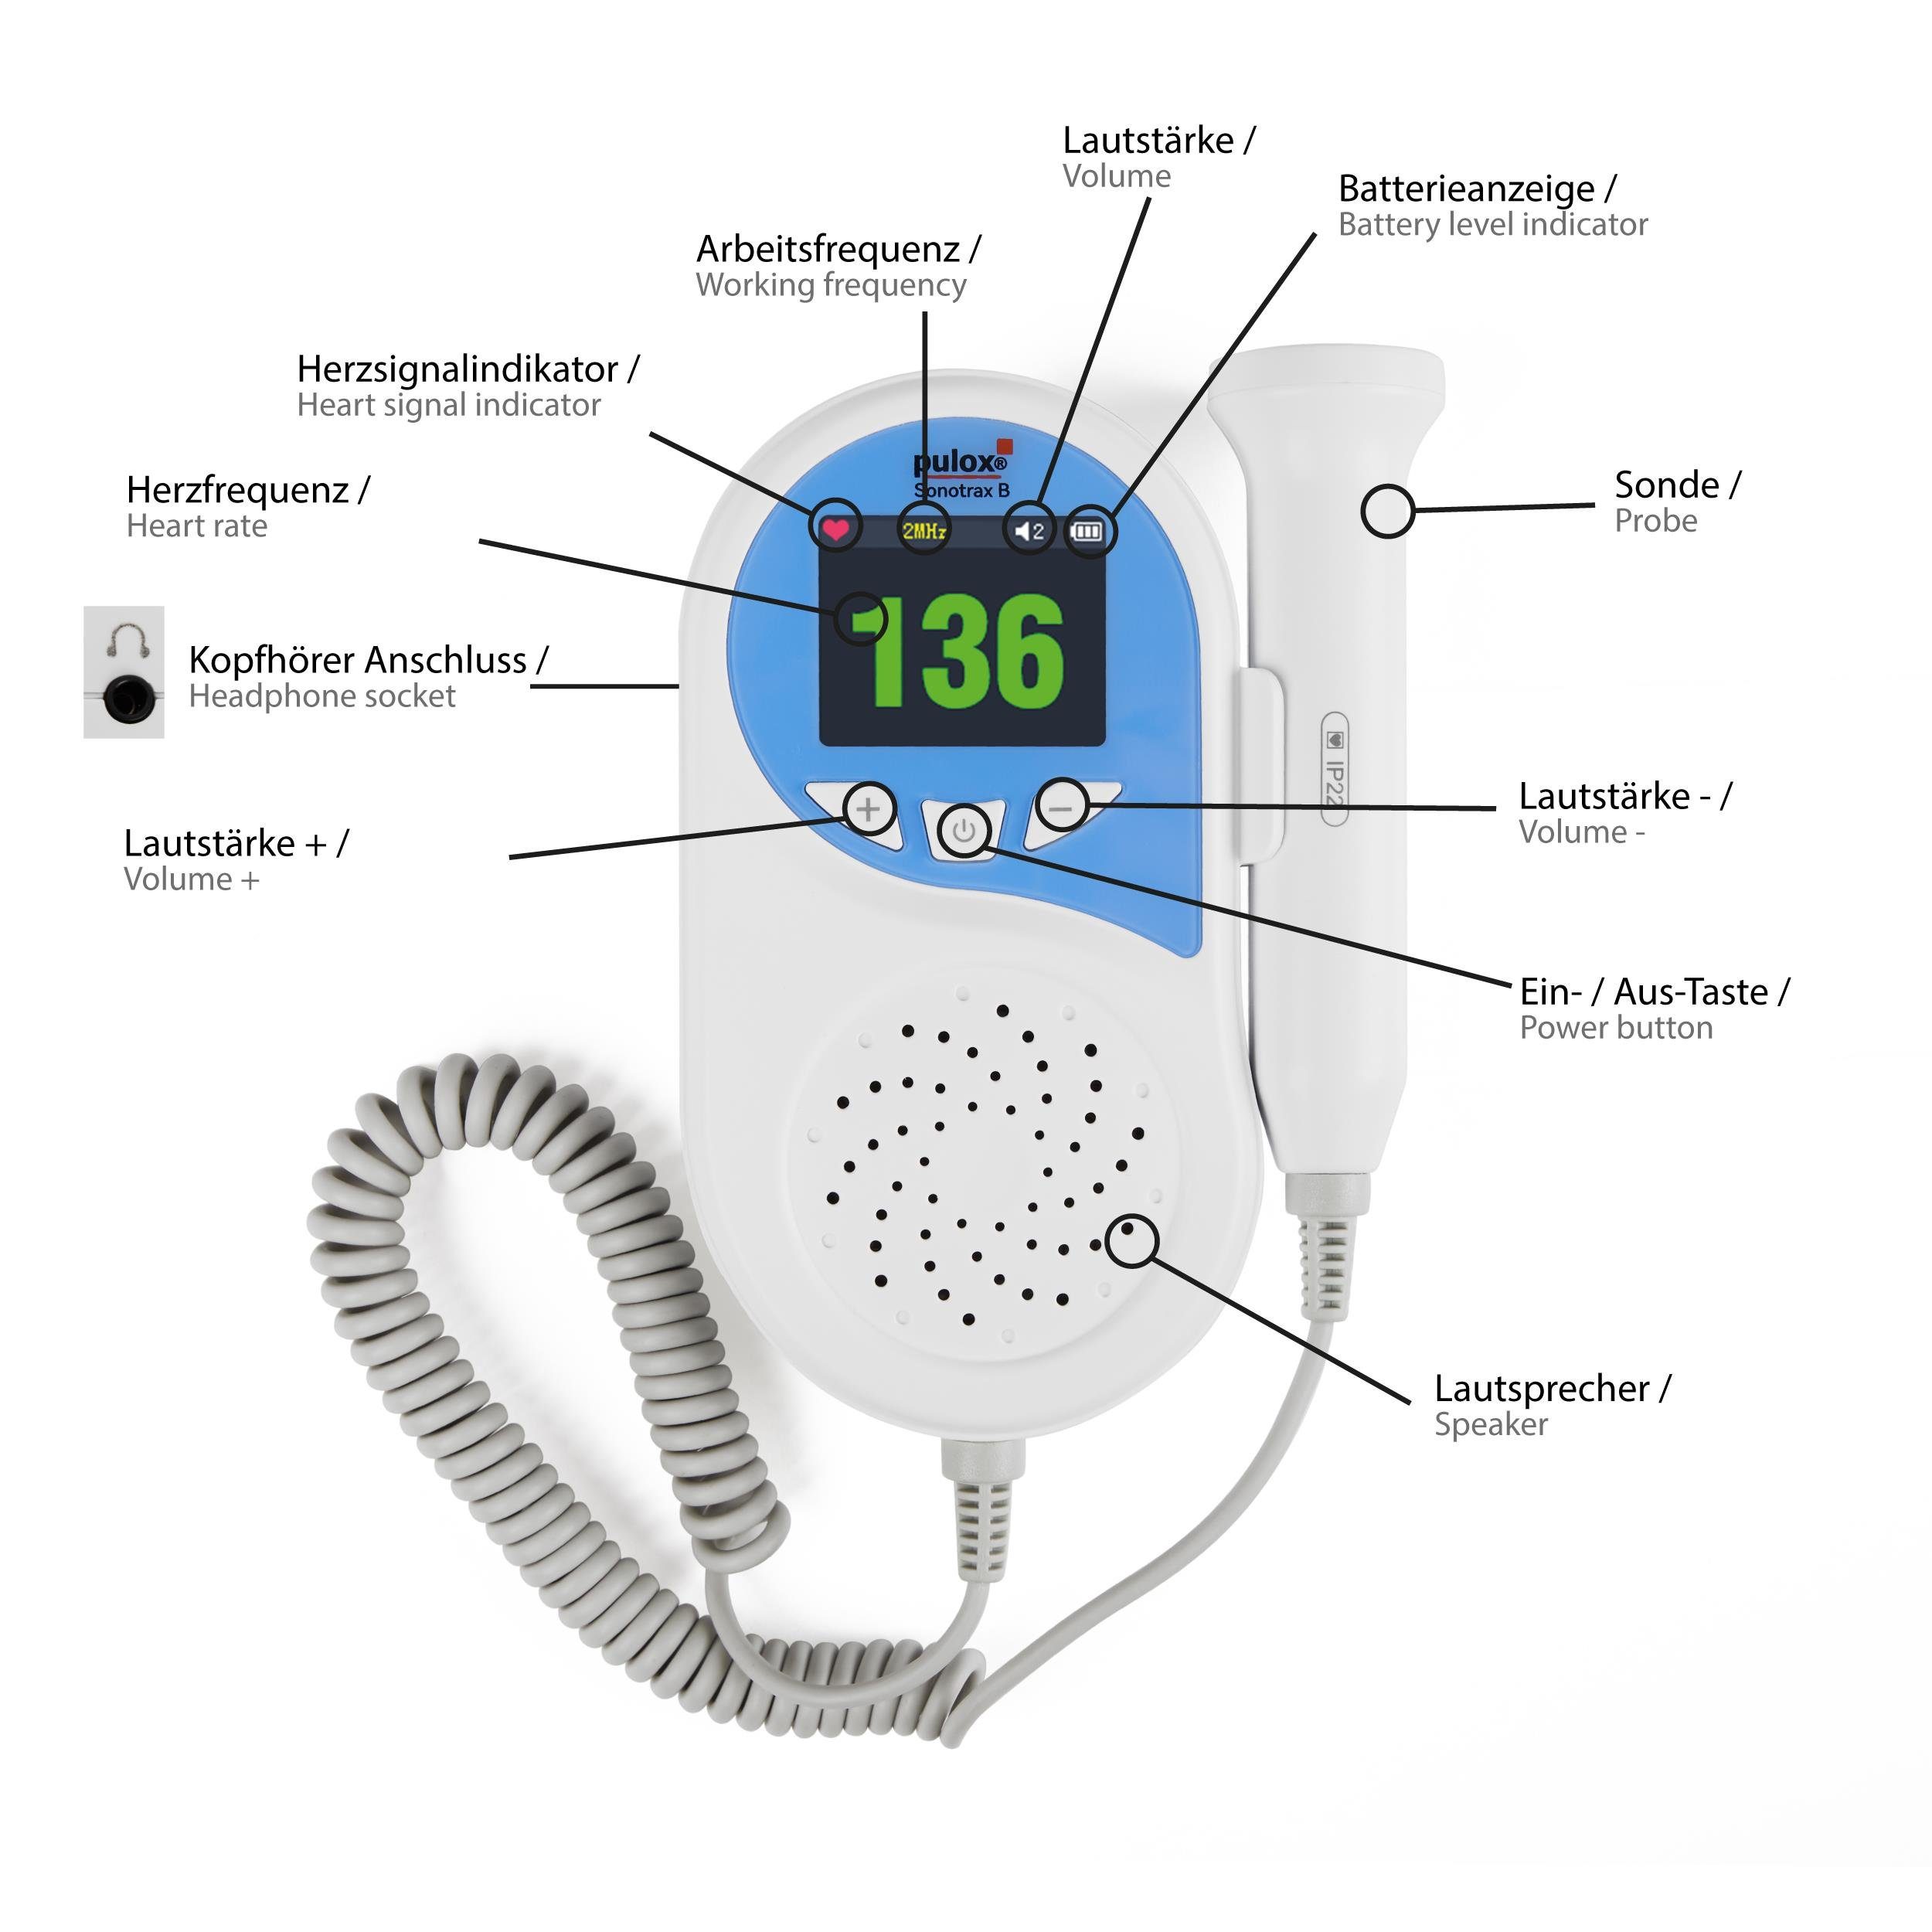 pulox Babyphone Sonotrax B Ultraschall mit Fetal-Doppler Lautsprecher 